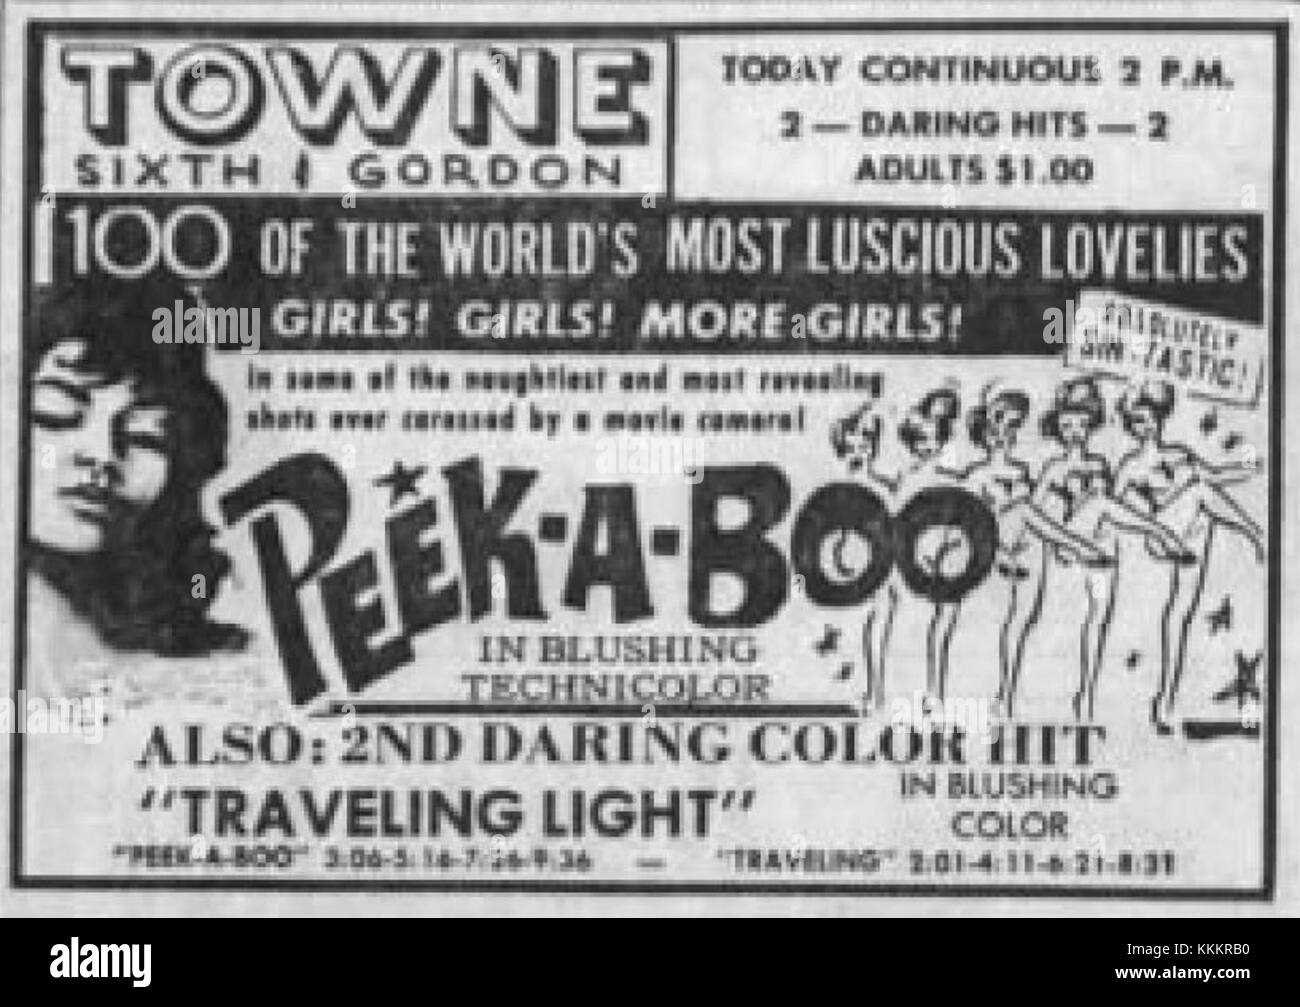 1964 - Towne Theater Ad - 15 Jan MC - Allentown PA Stock Photo